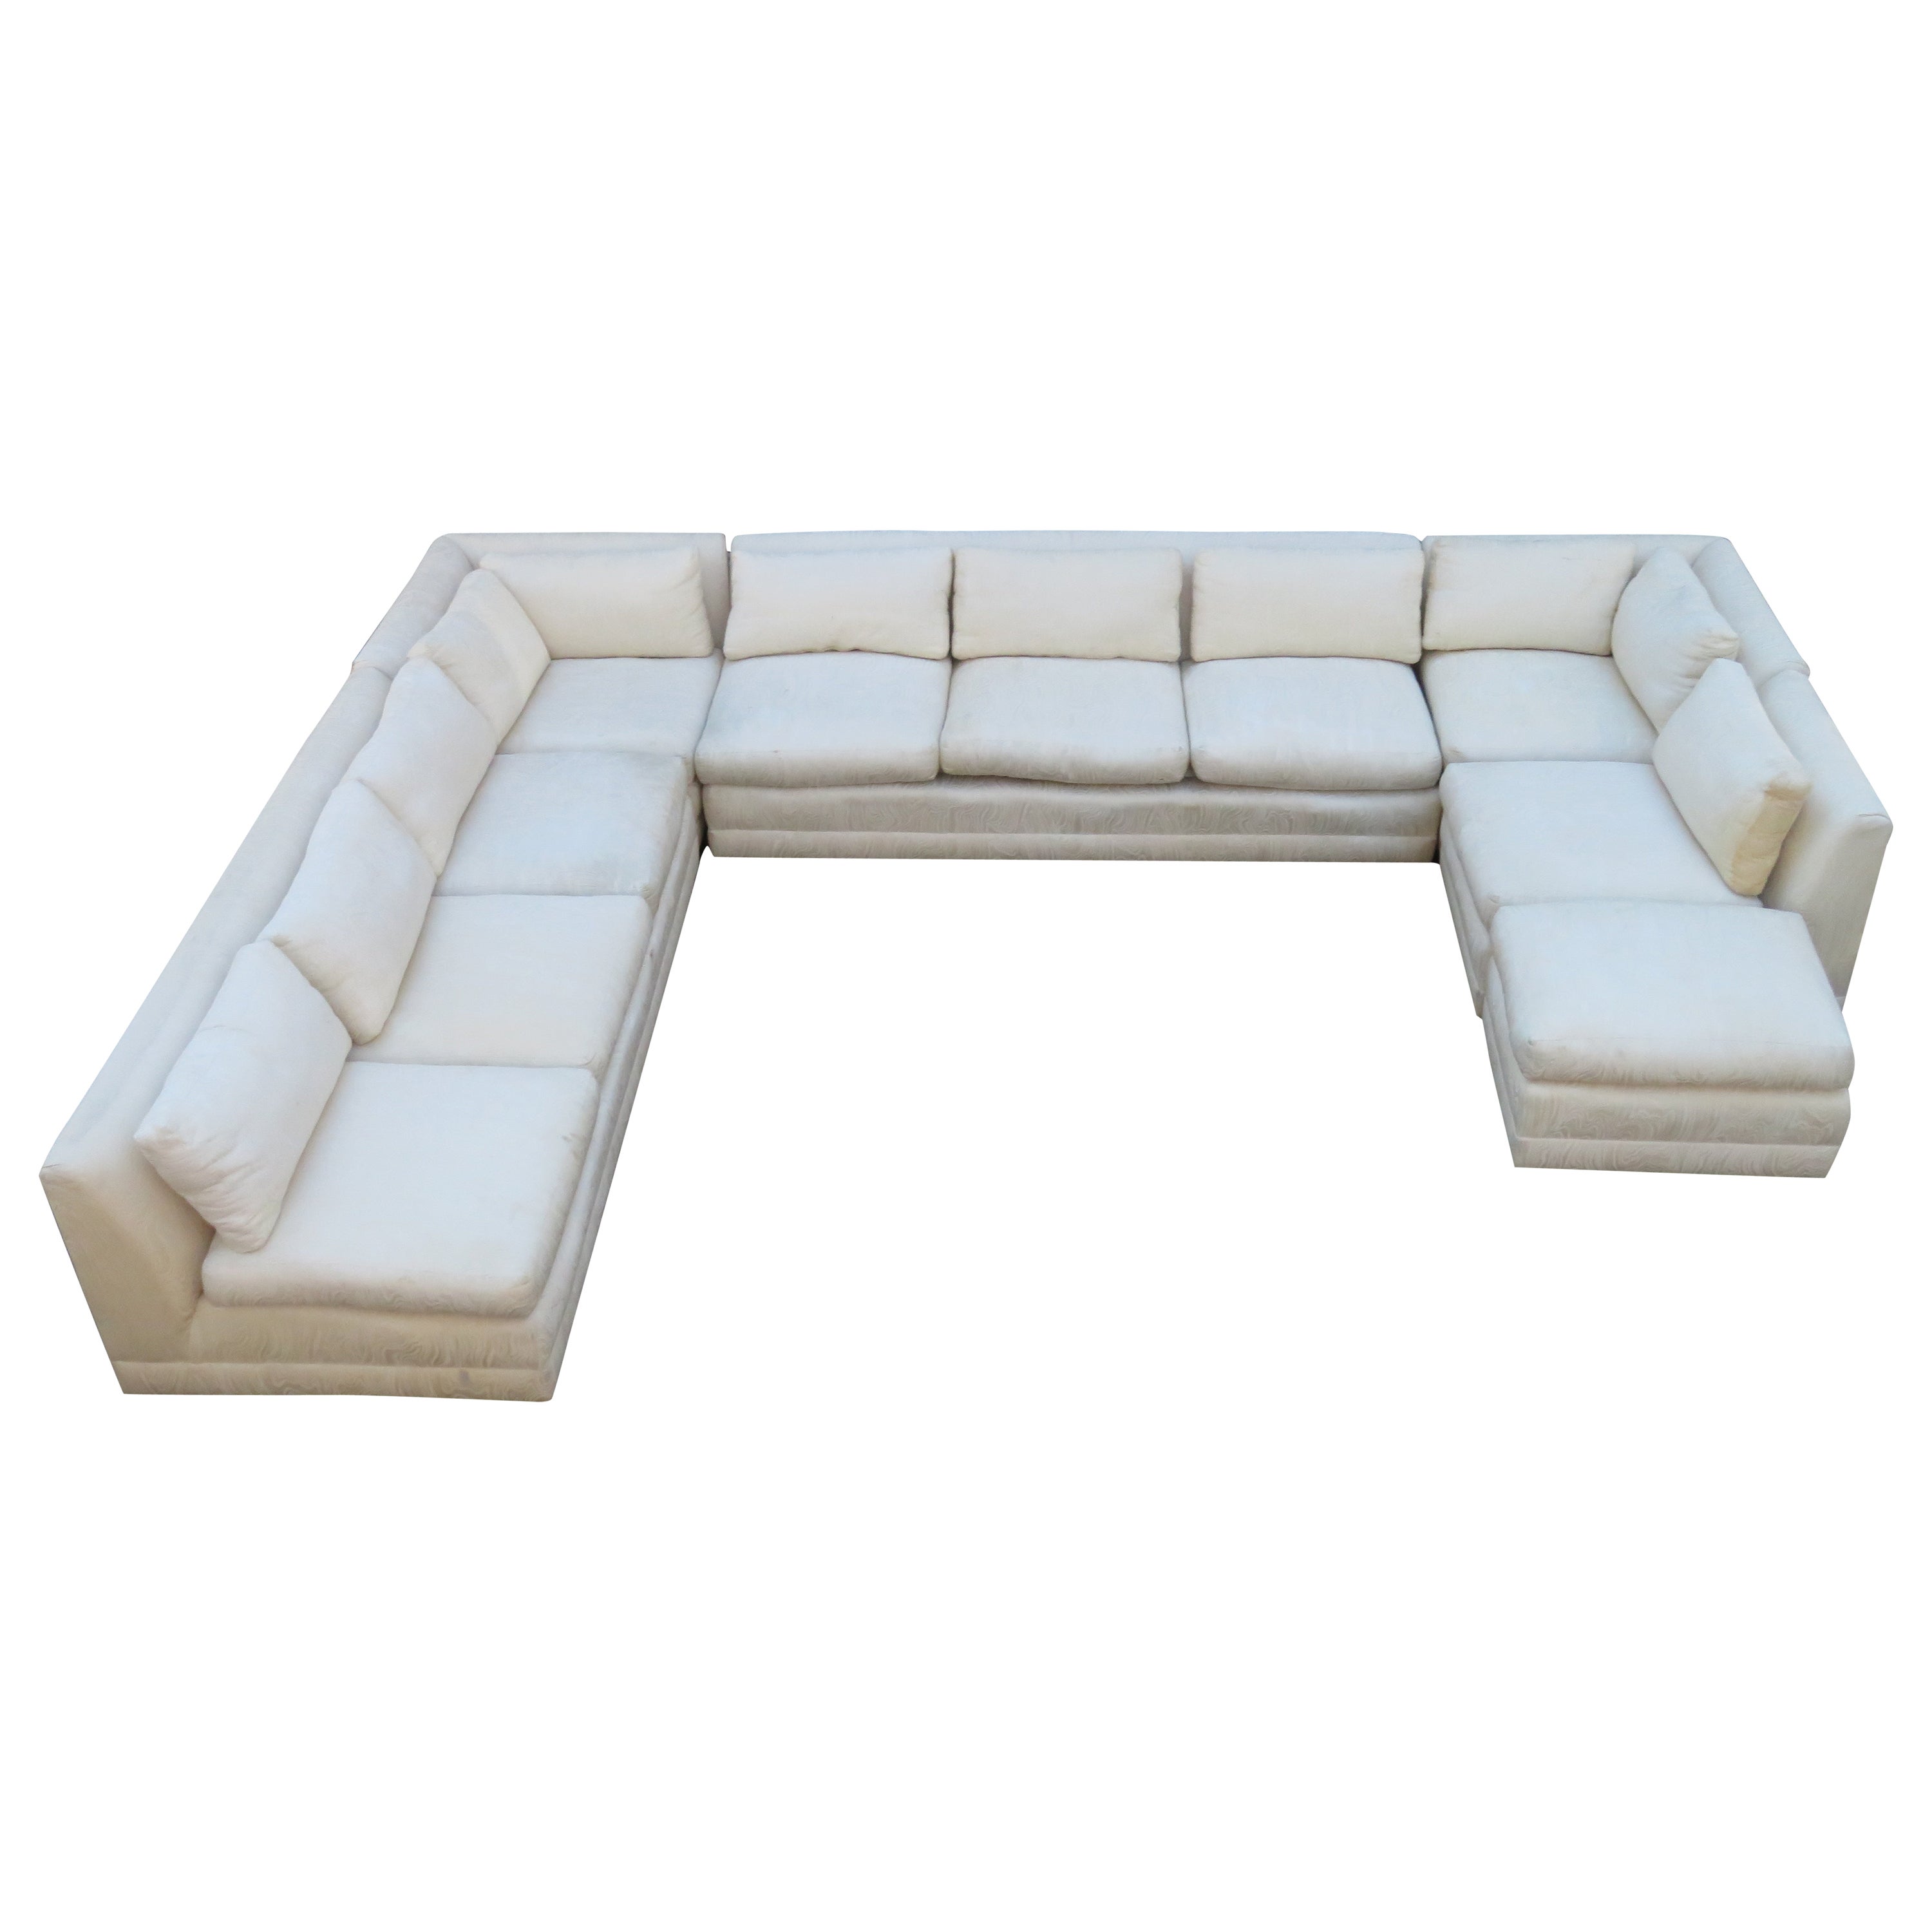 Handsome 6 Piece Milo Baughman Directional Sectional Sofa Mid-Century Modern